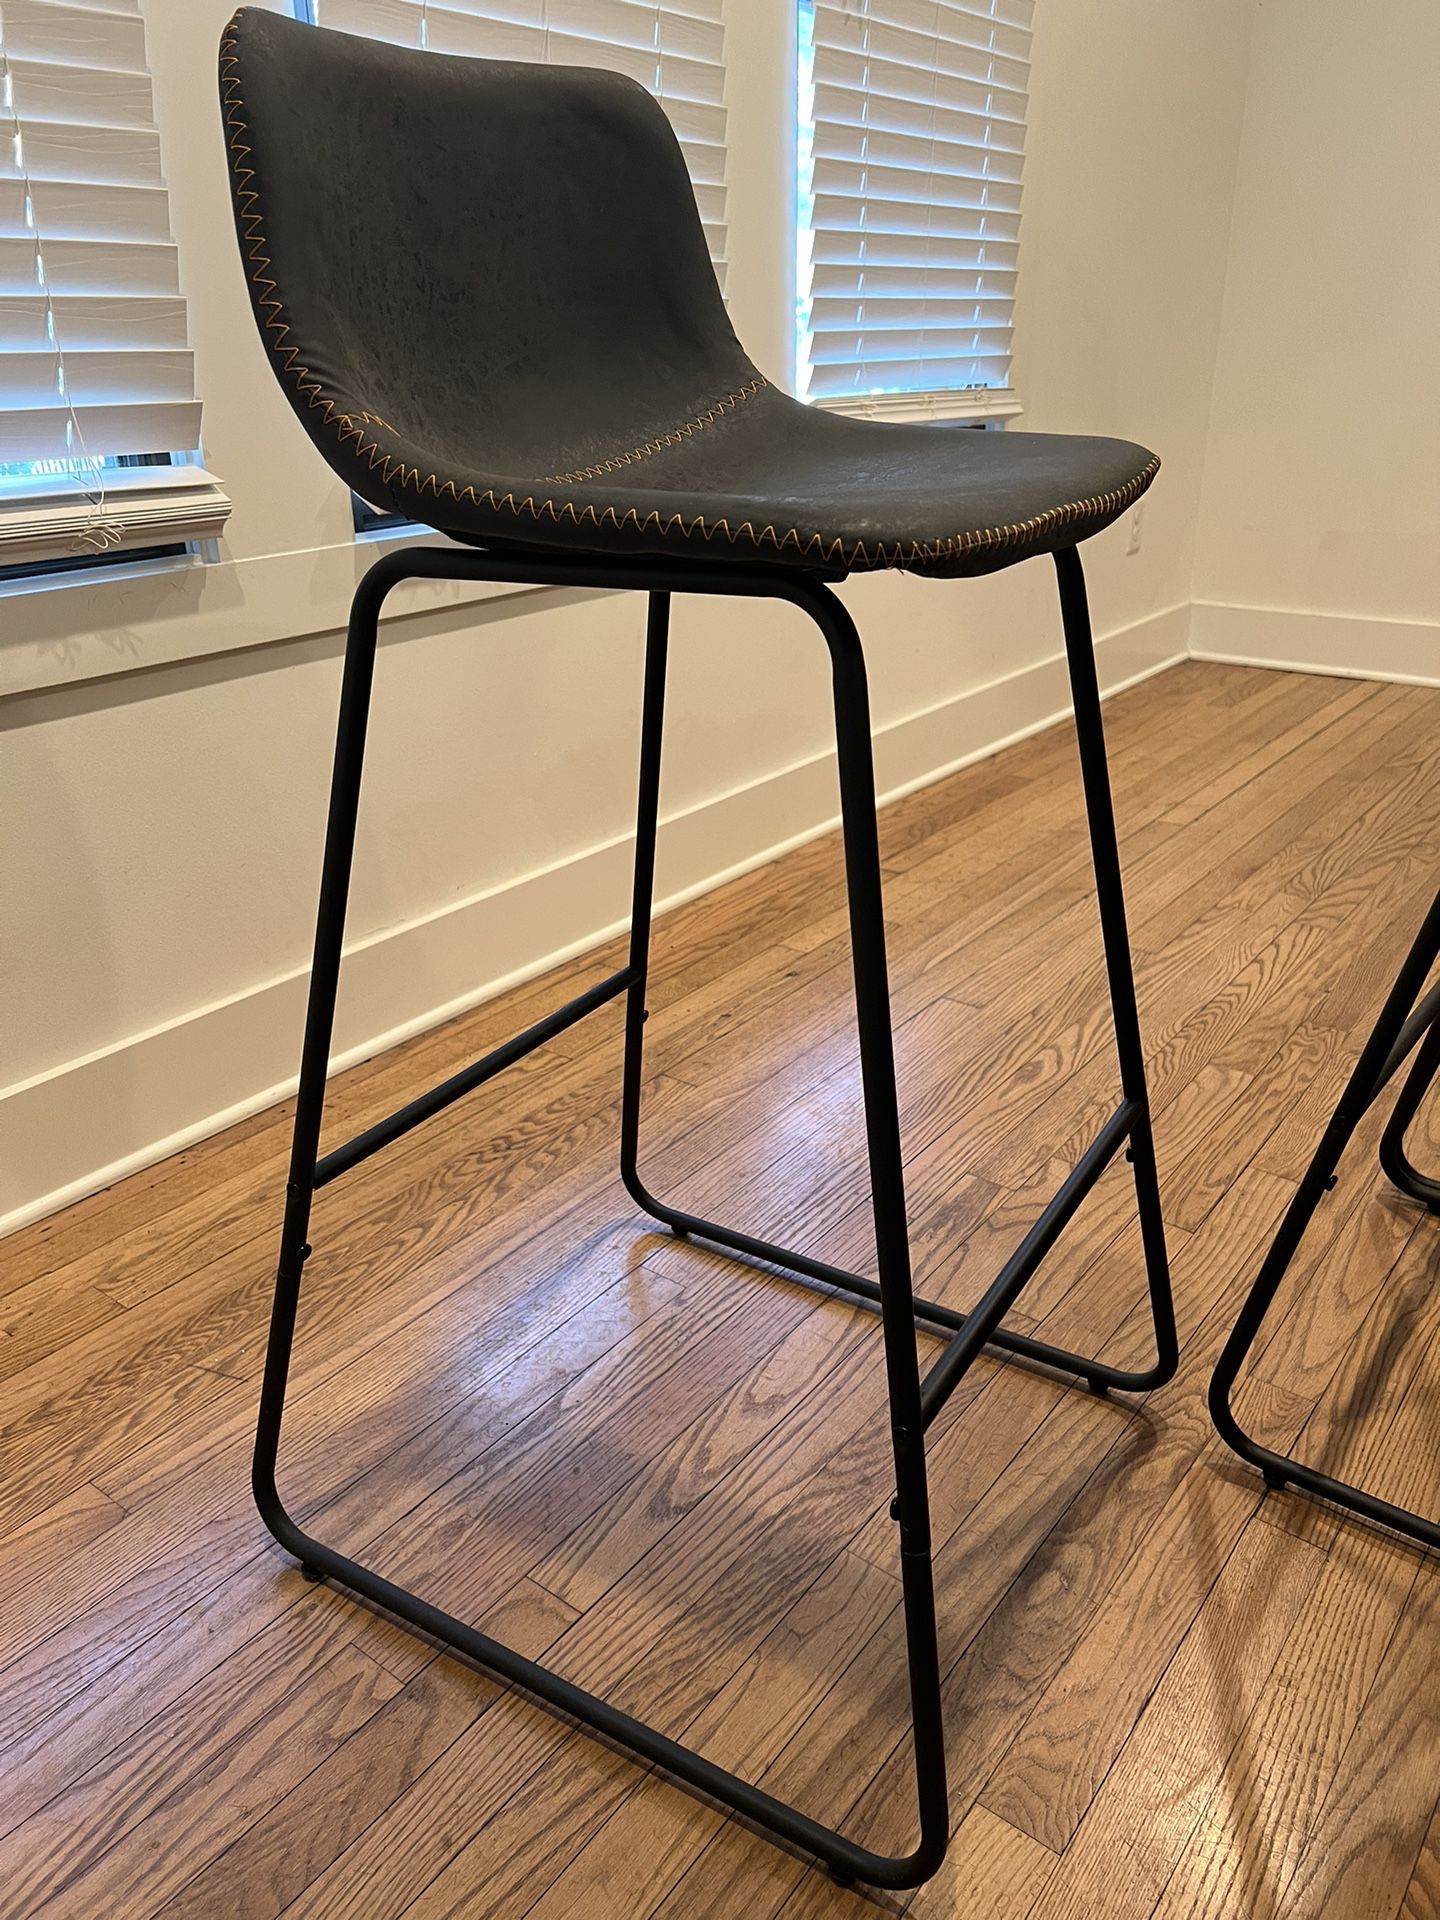 Set of 4 30” height bar stools 